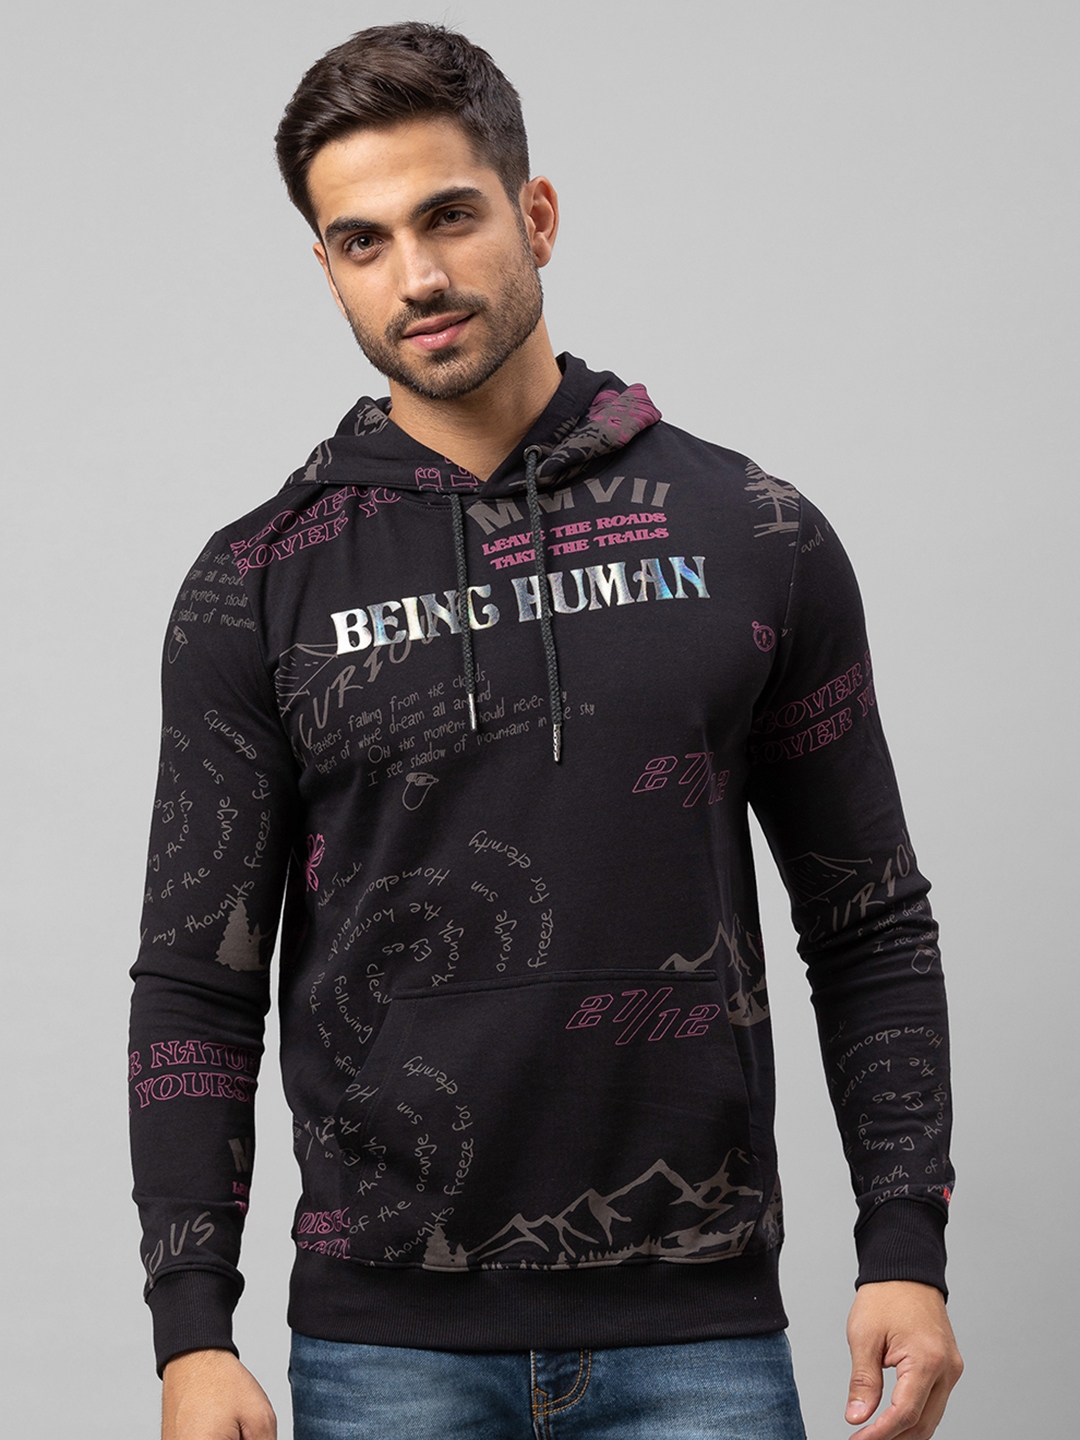 Buy Being Human Men Black Printed Sweatshirt - Sweatshirts for Men